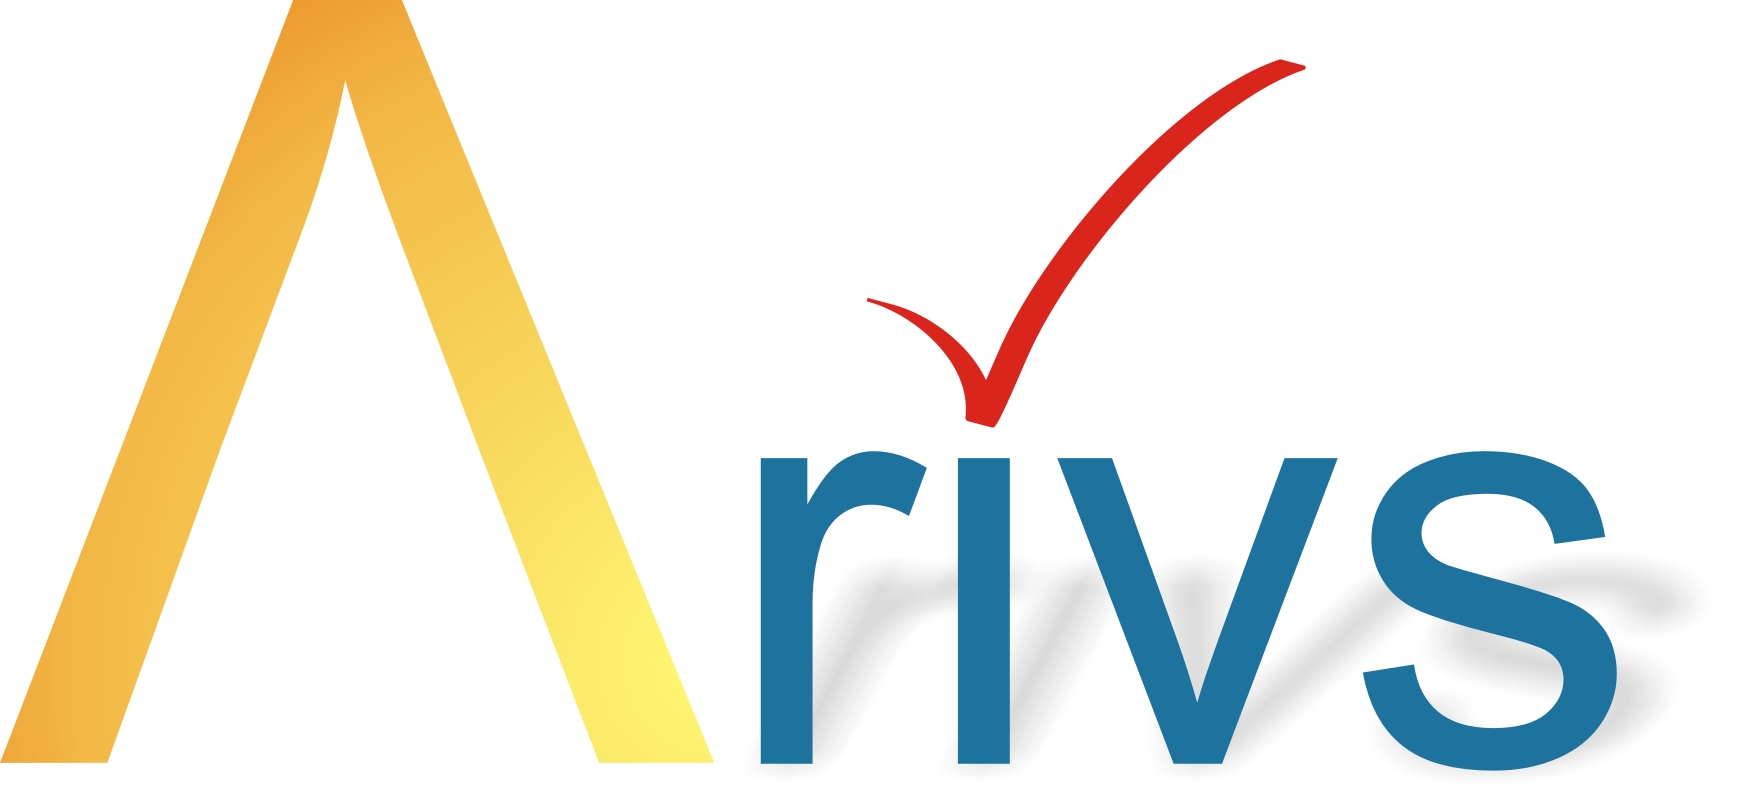 arivs logo 2.jpg